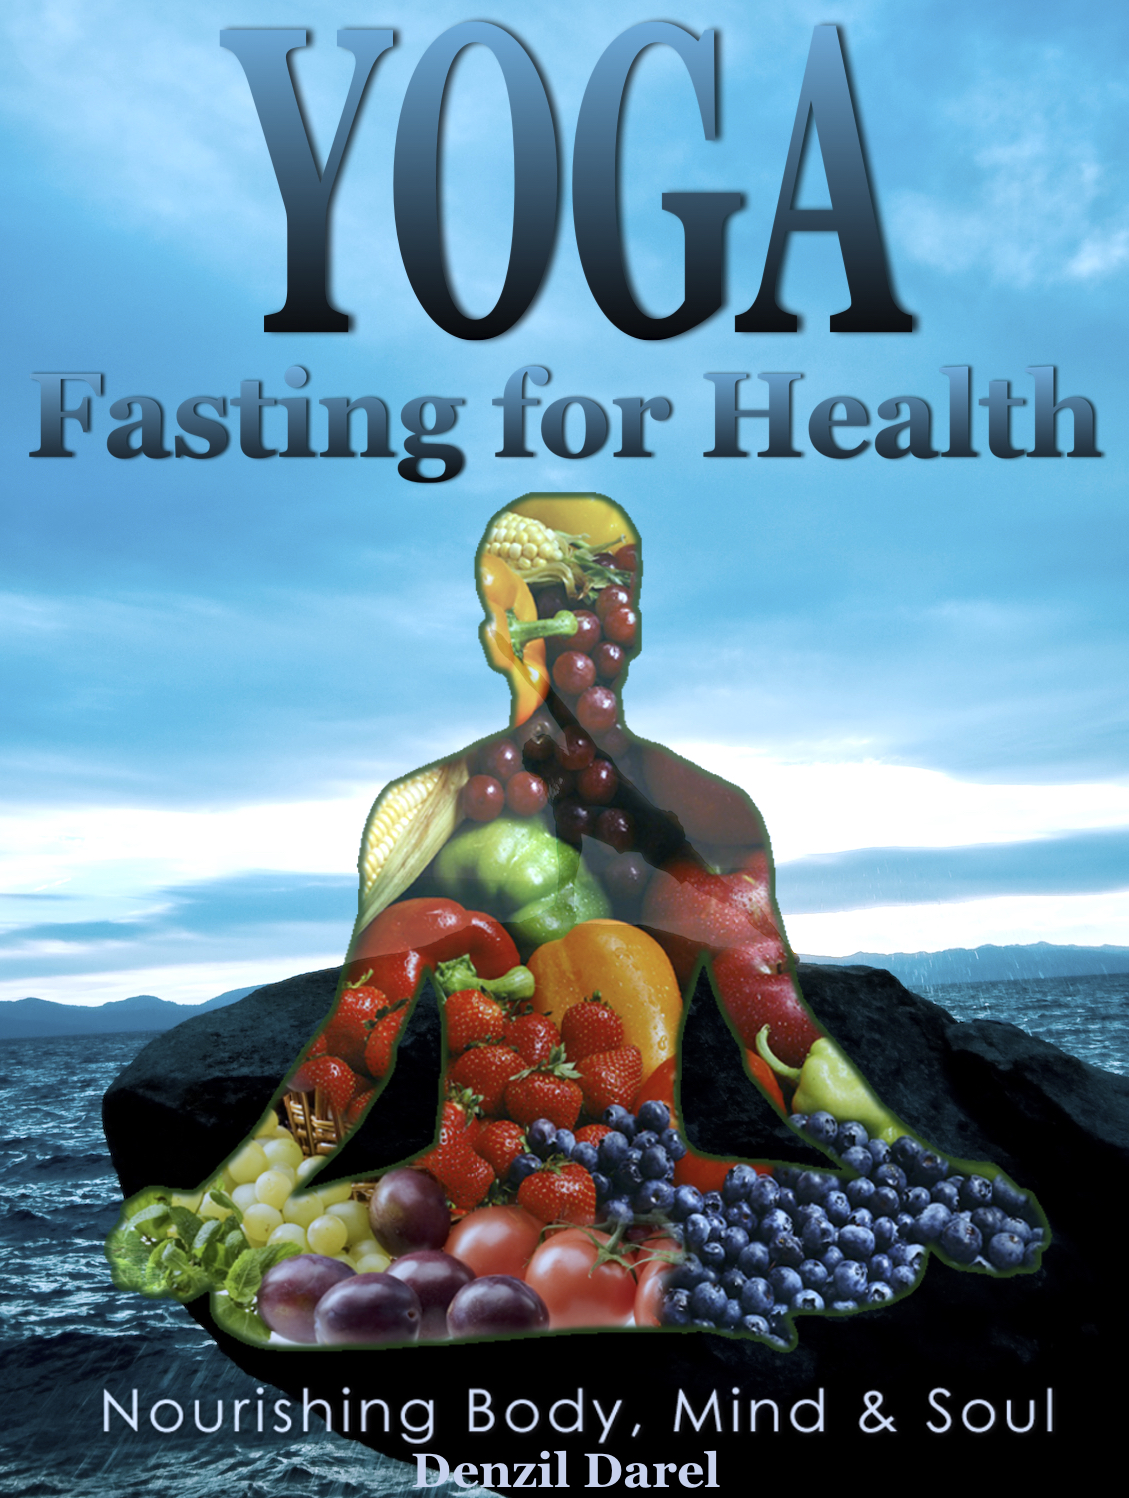 FREE: Yoga: Fasting for Health – Nourishing Body, Mind & Soul by Denzil Darel